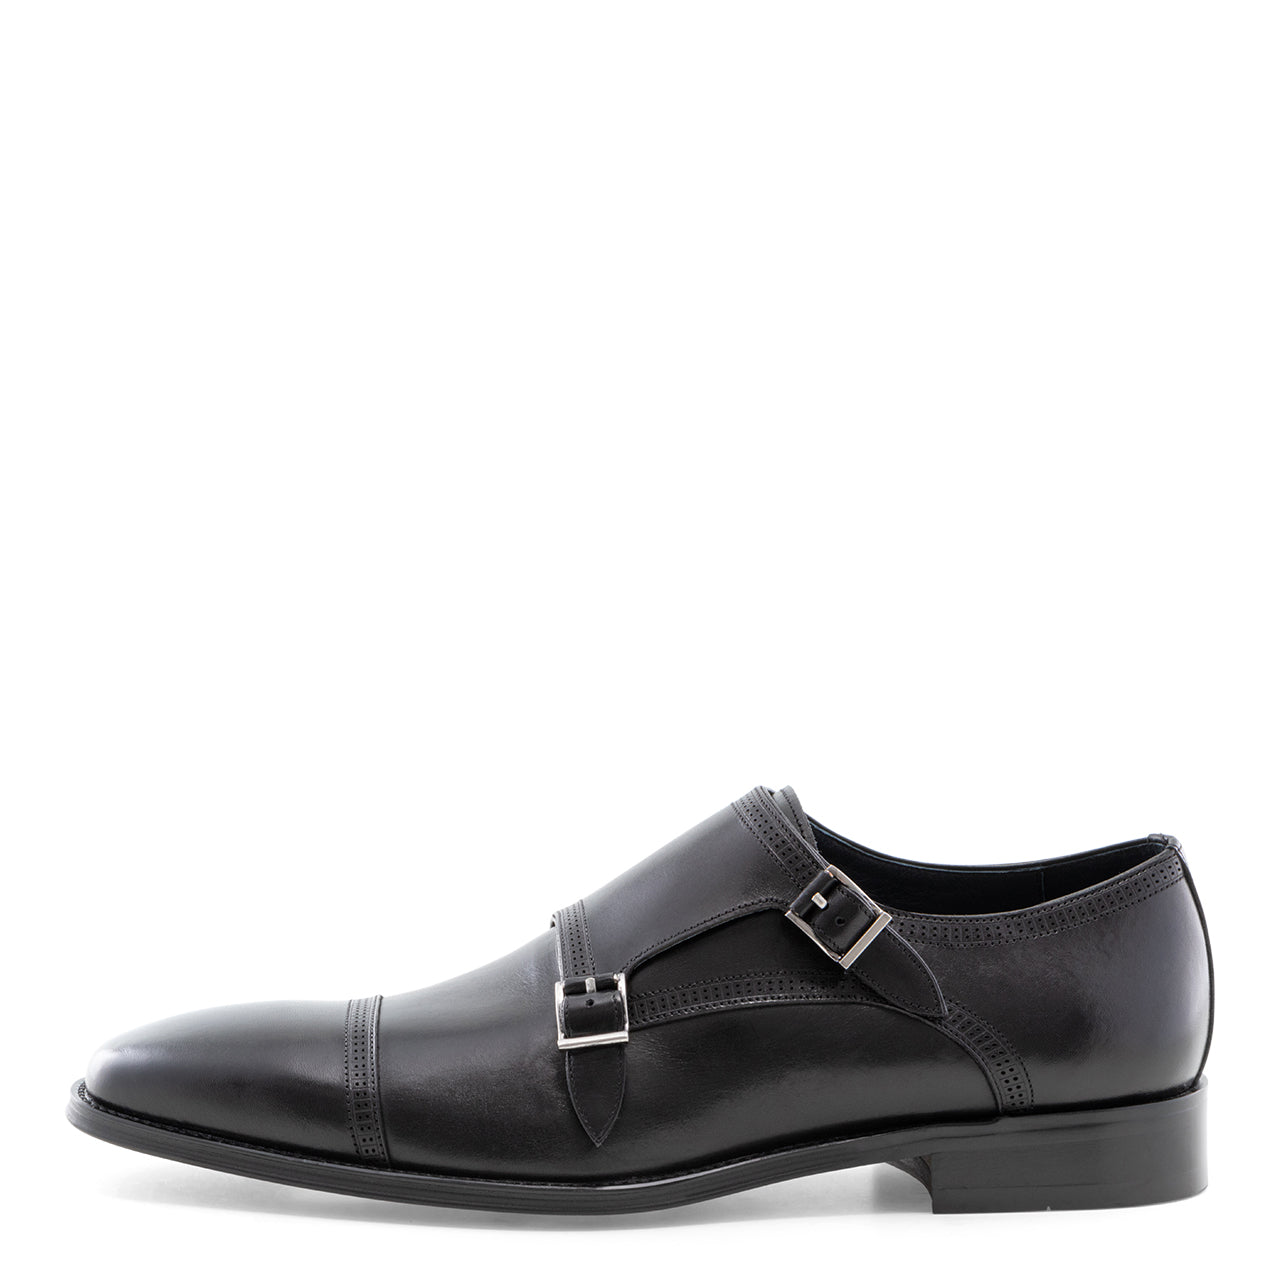 Mccain - Black Double Monk Straps Oxford Dress Shoes for Men by Jump 2